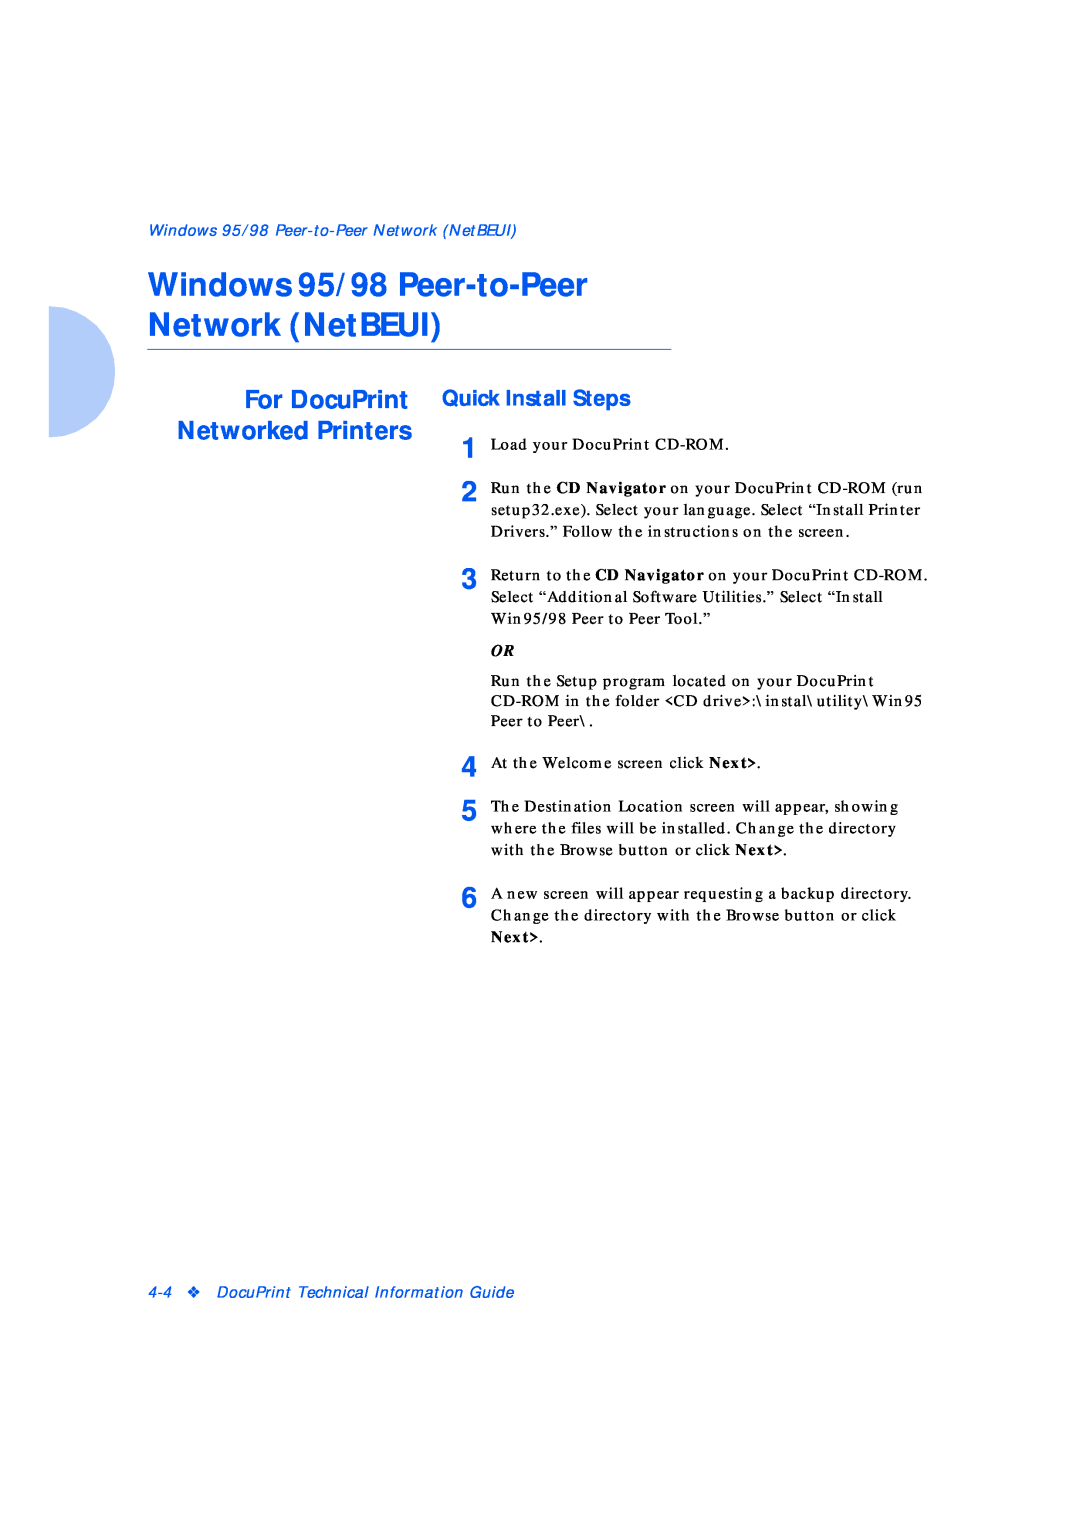 Xerox Network Laser Printers manual Windows 95/98 Peer-to-Peer Network NetBEUI, Networked Printers 